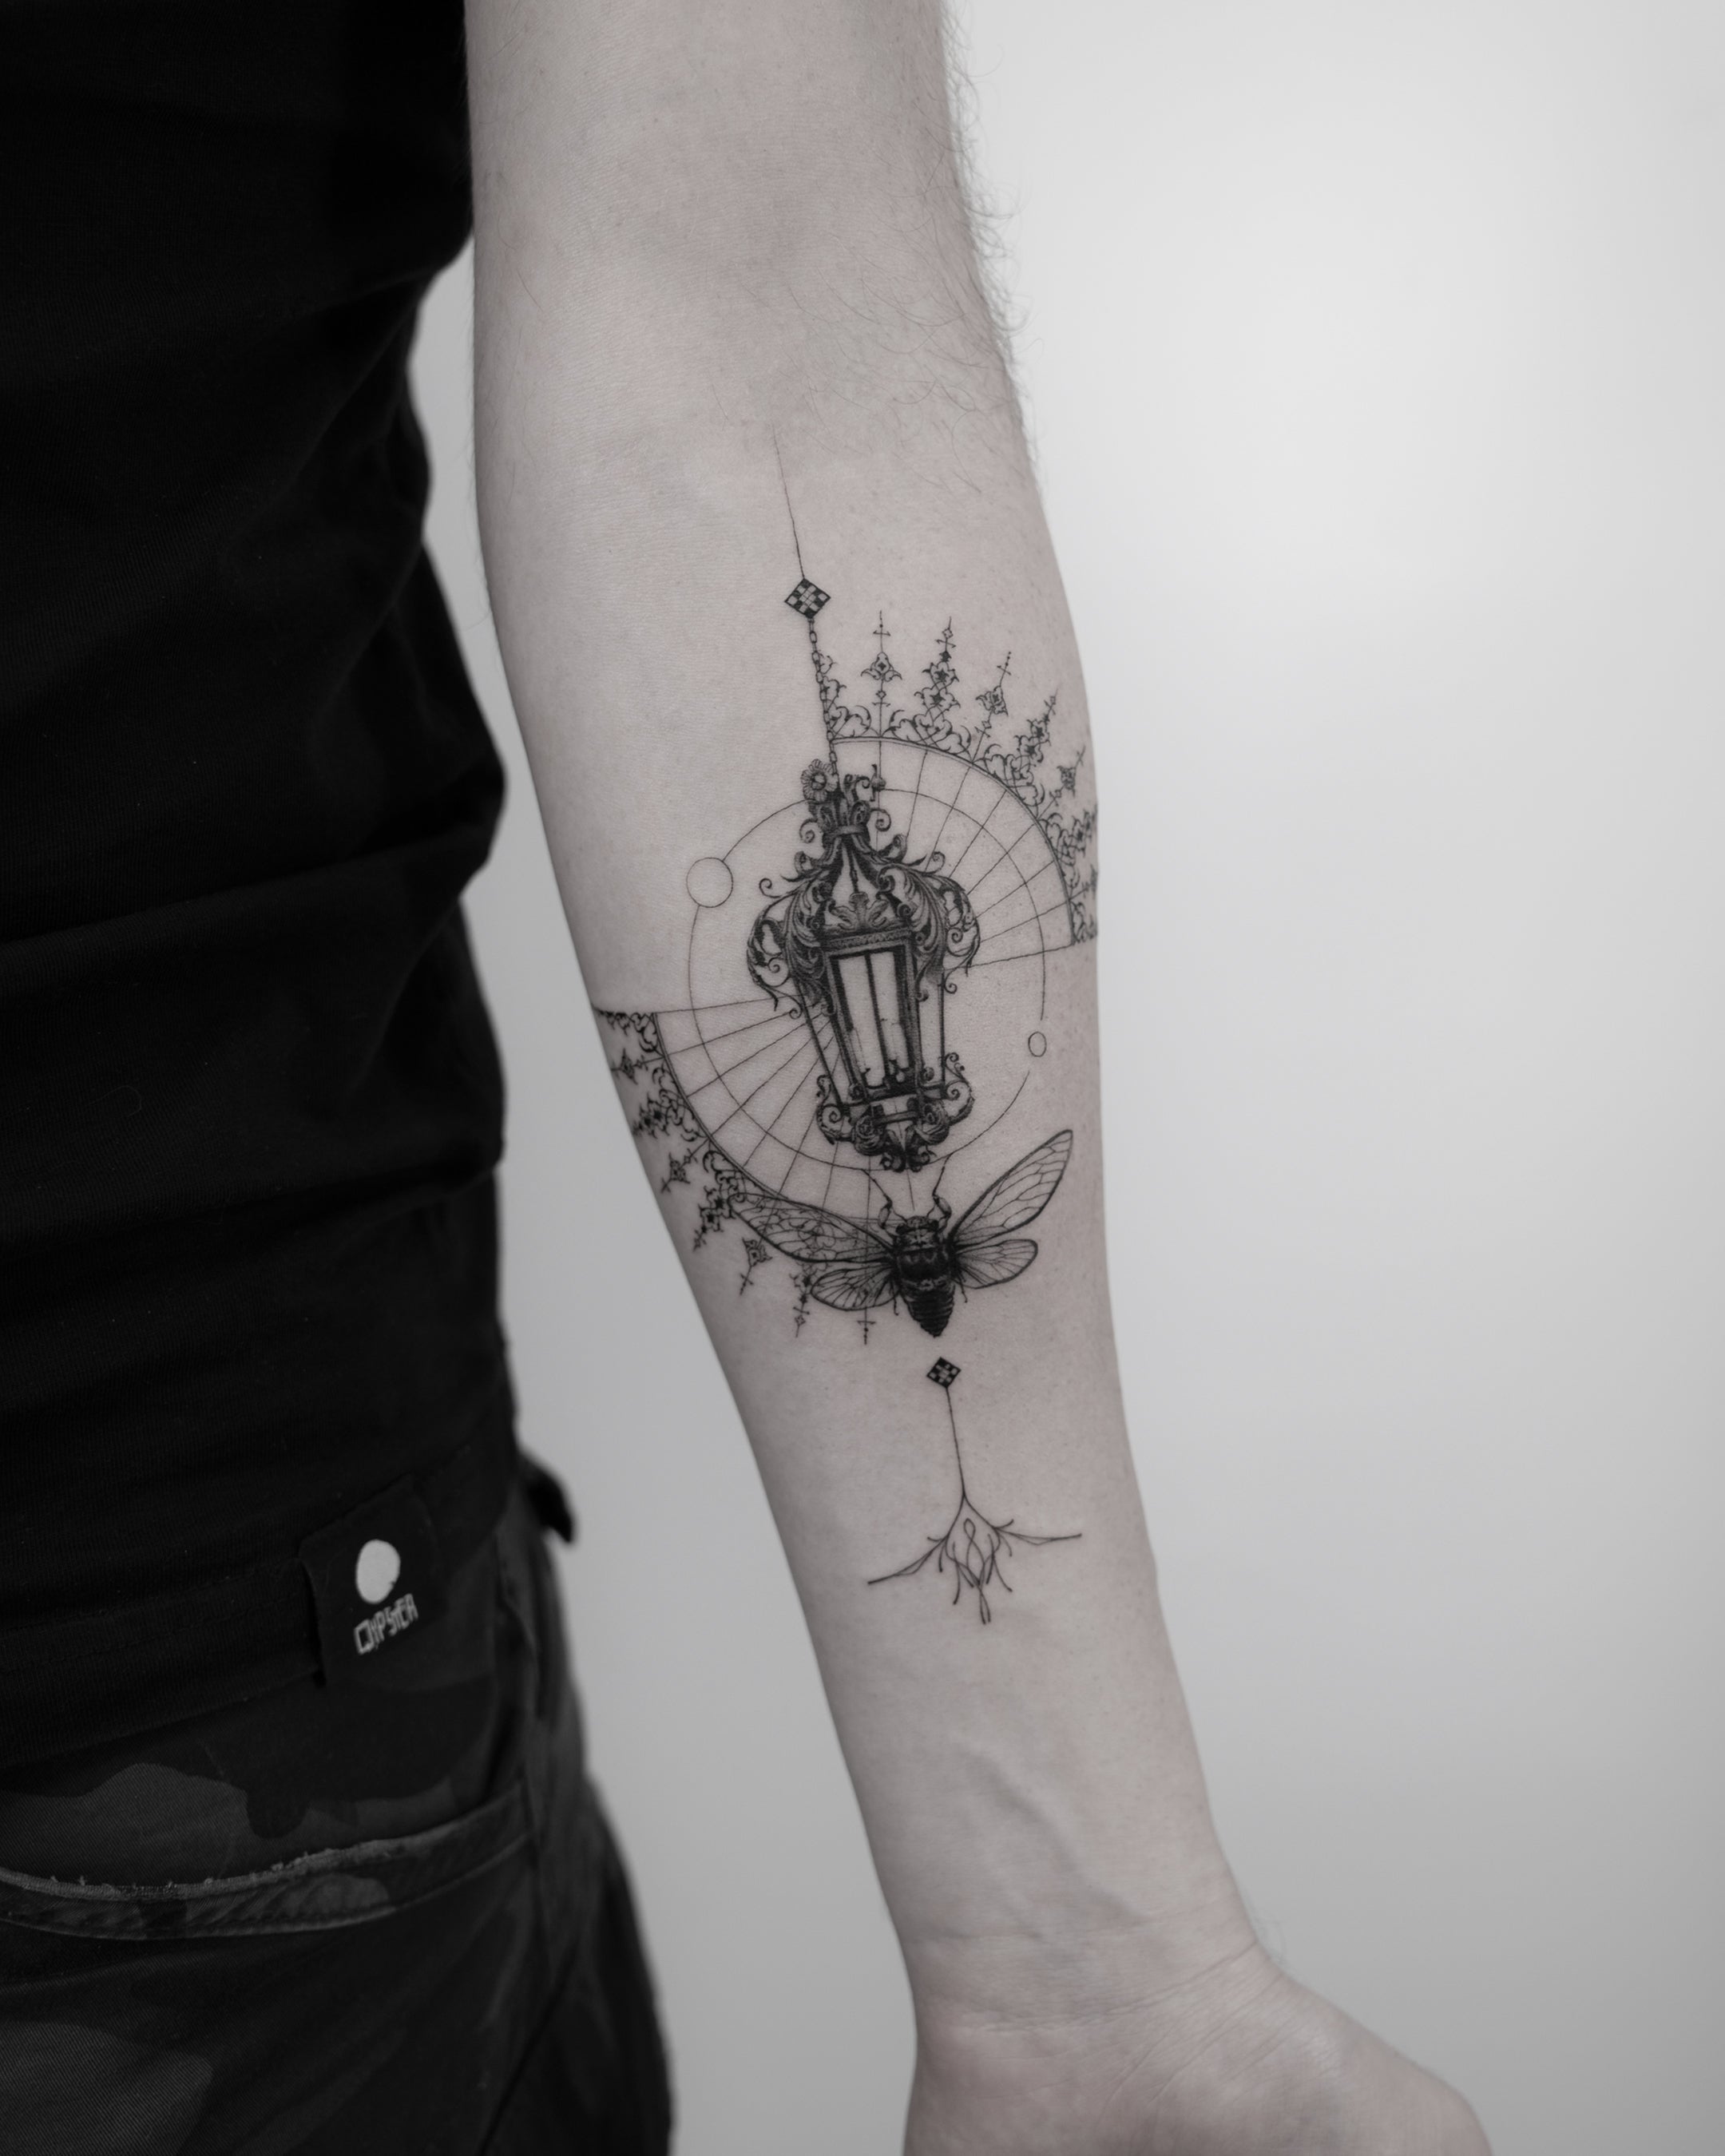 Optical illusion balconies tattooed on the arm done by @tsyna.tattoo |  www.otziapp.com | Tattoos, Neck tattoo, Hip tattoo